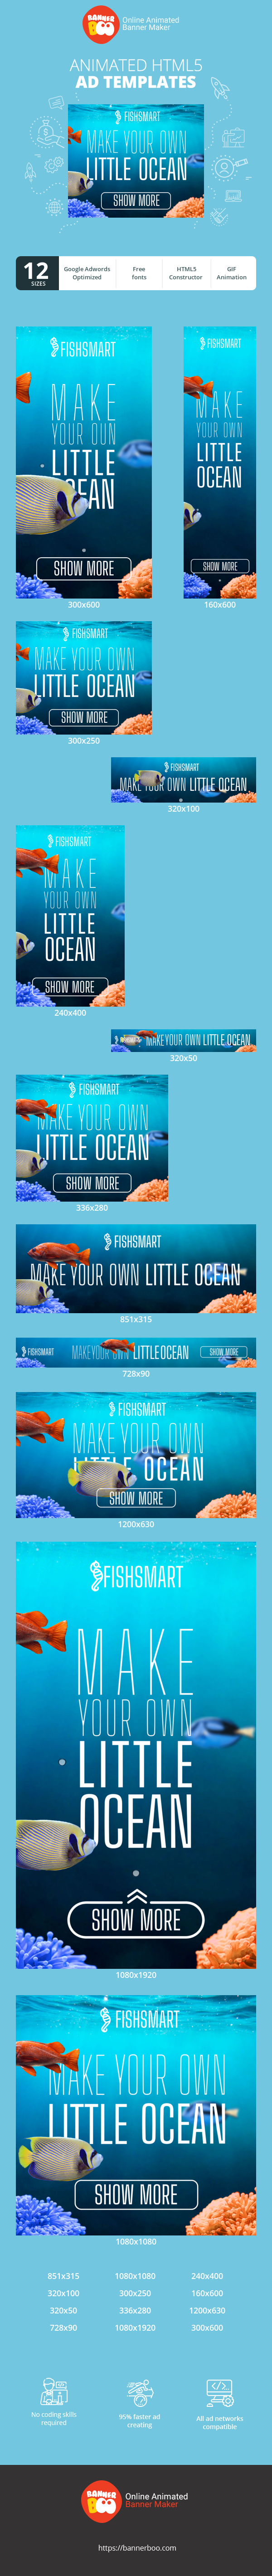 Szablon reklamy banerowej — Make Your Own Little Ocean — Pet Shop